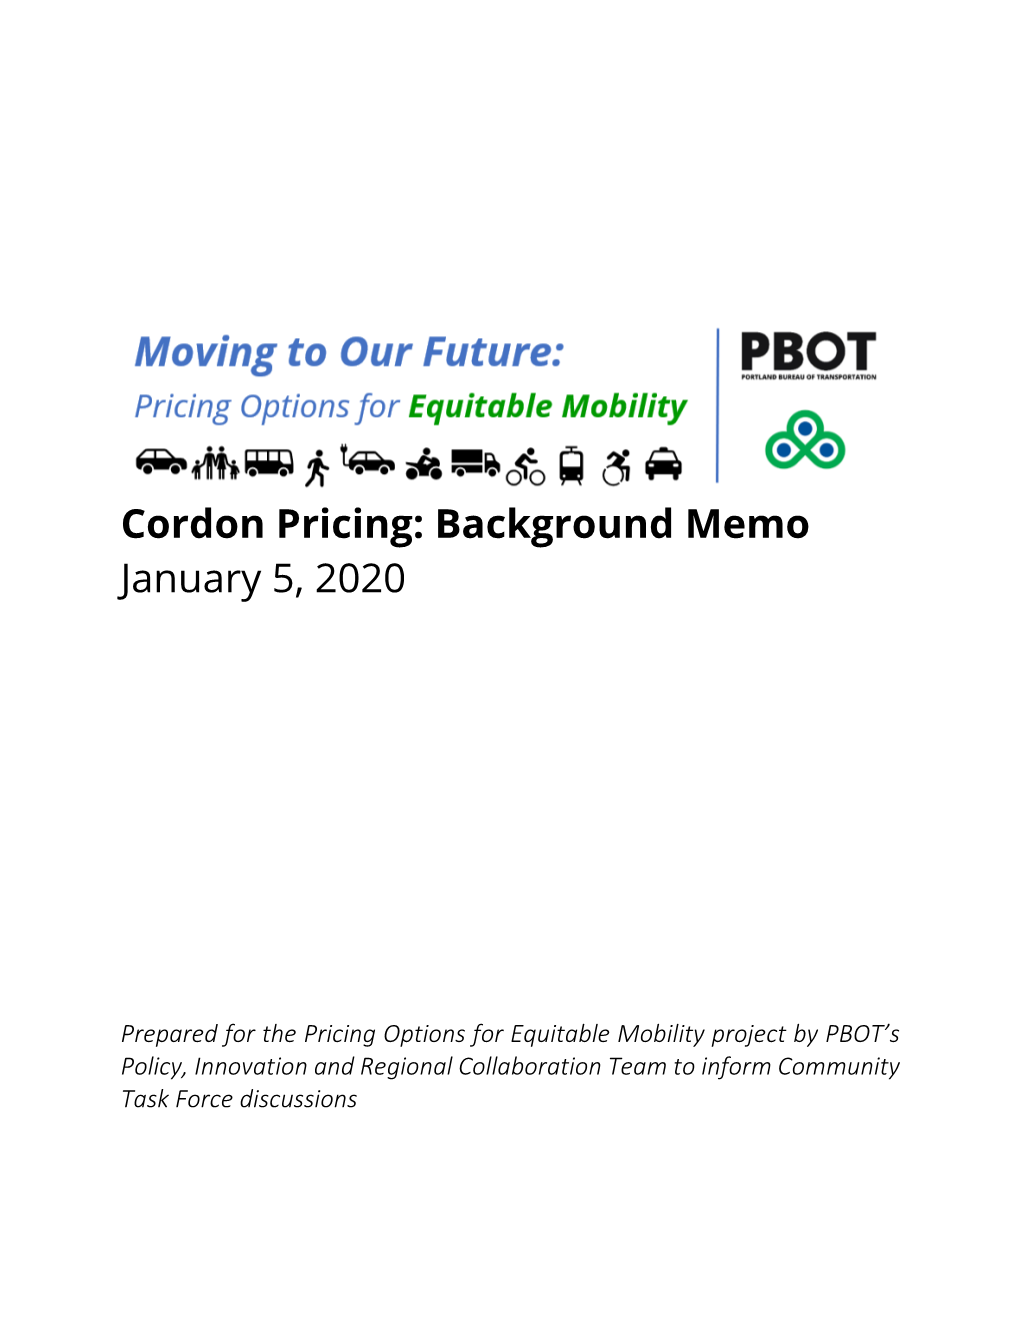 Cordon Pricing: Background Memo January 5, 2020